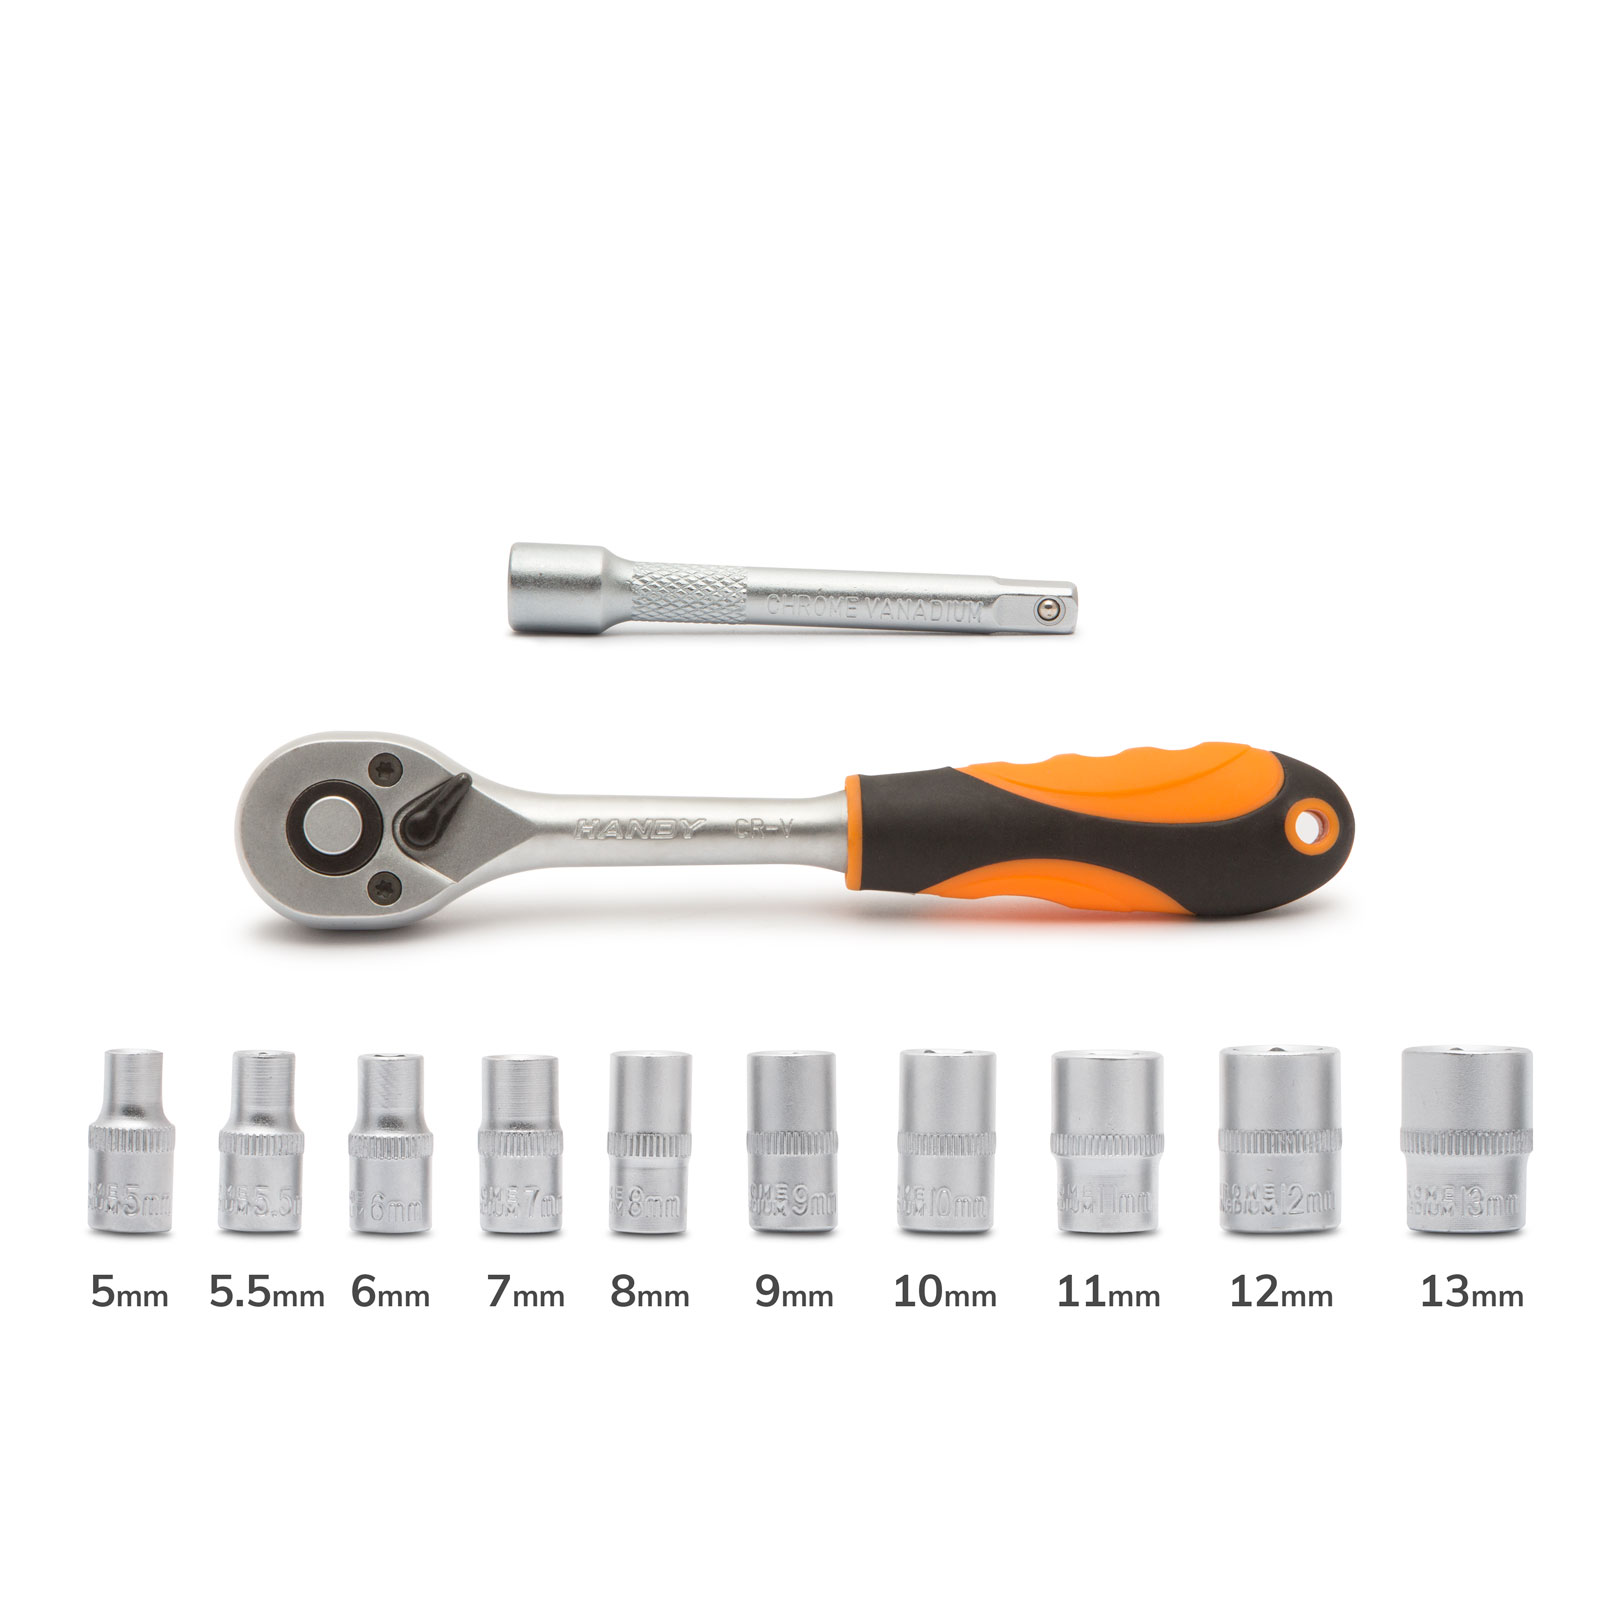 Ratchet wrench set - 1/4" - 12 pcs thumb